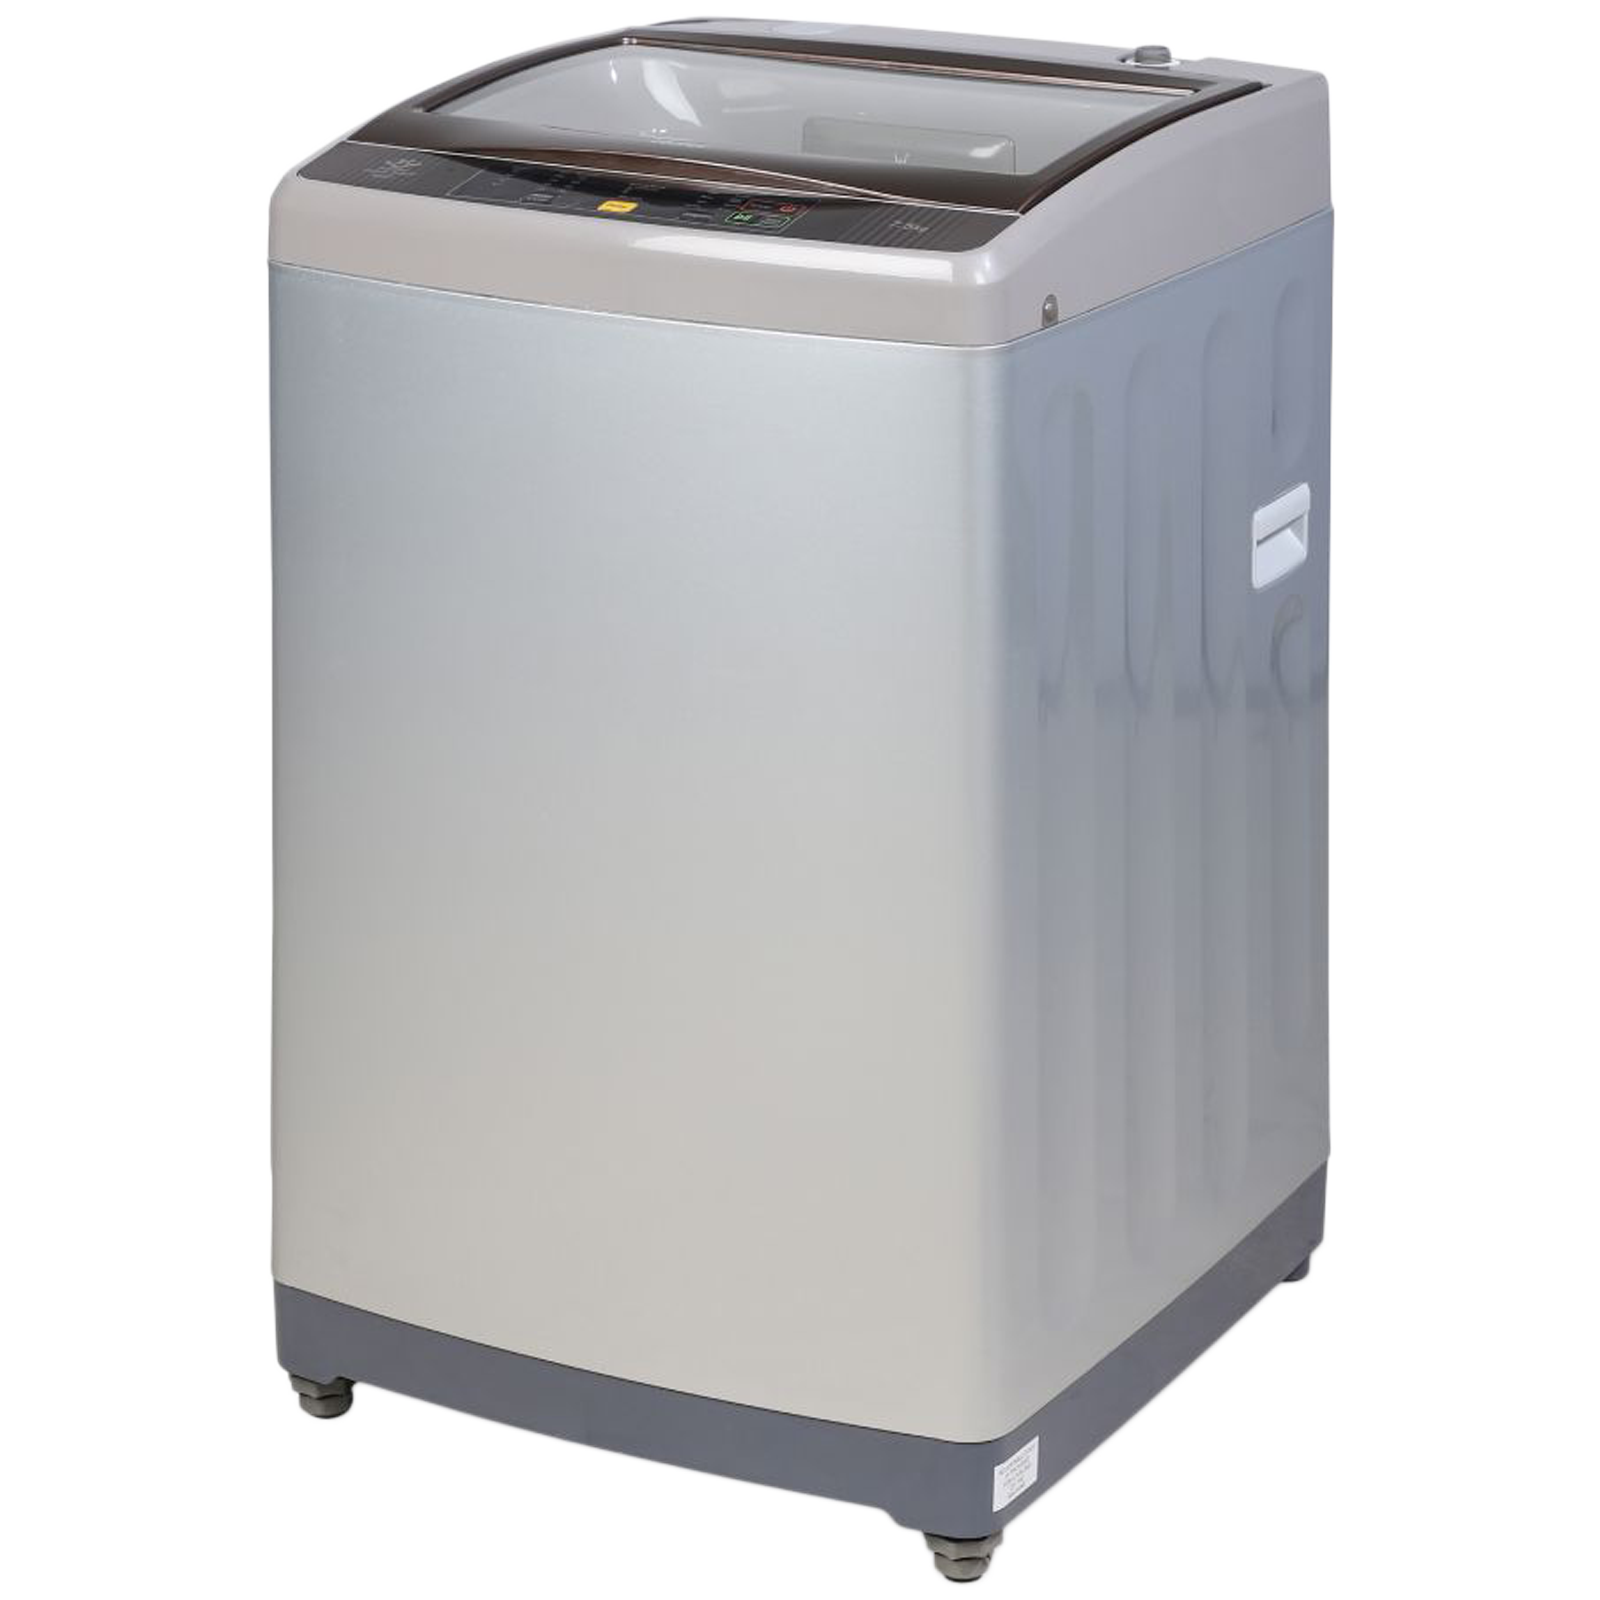 Haier 7.5 kg Fully Automatic Top Load Washing Machine (Softfall Technology, HWM75708NZP, Silver Grey)_3